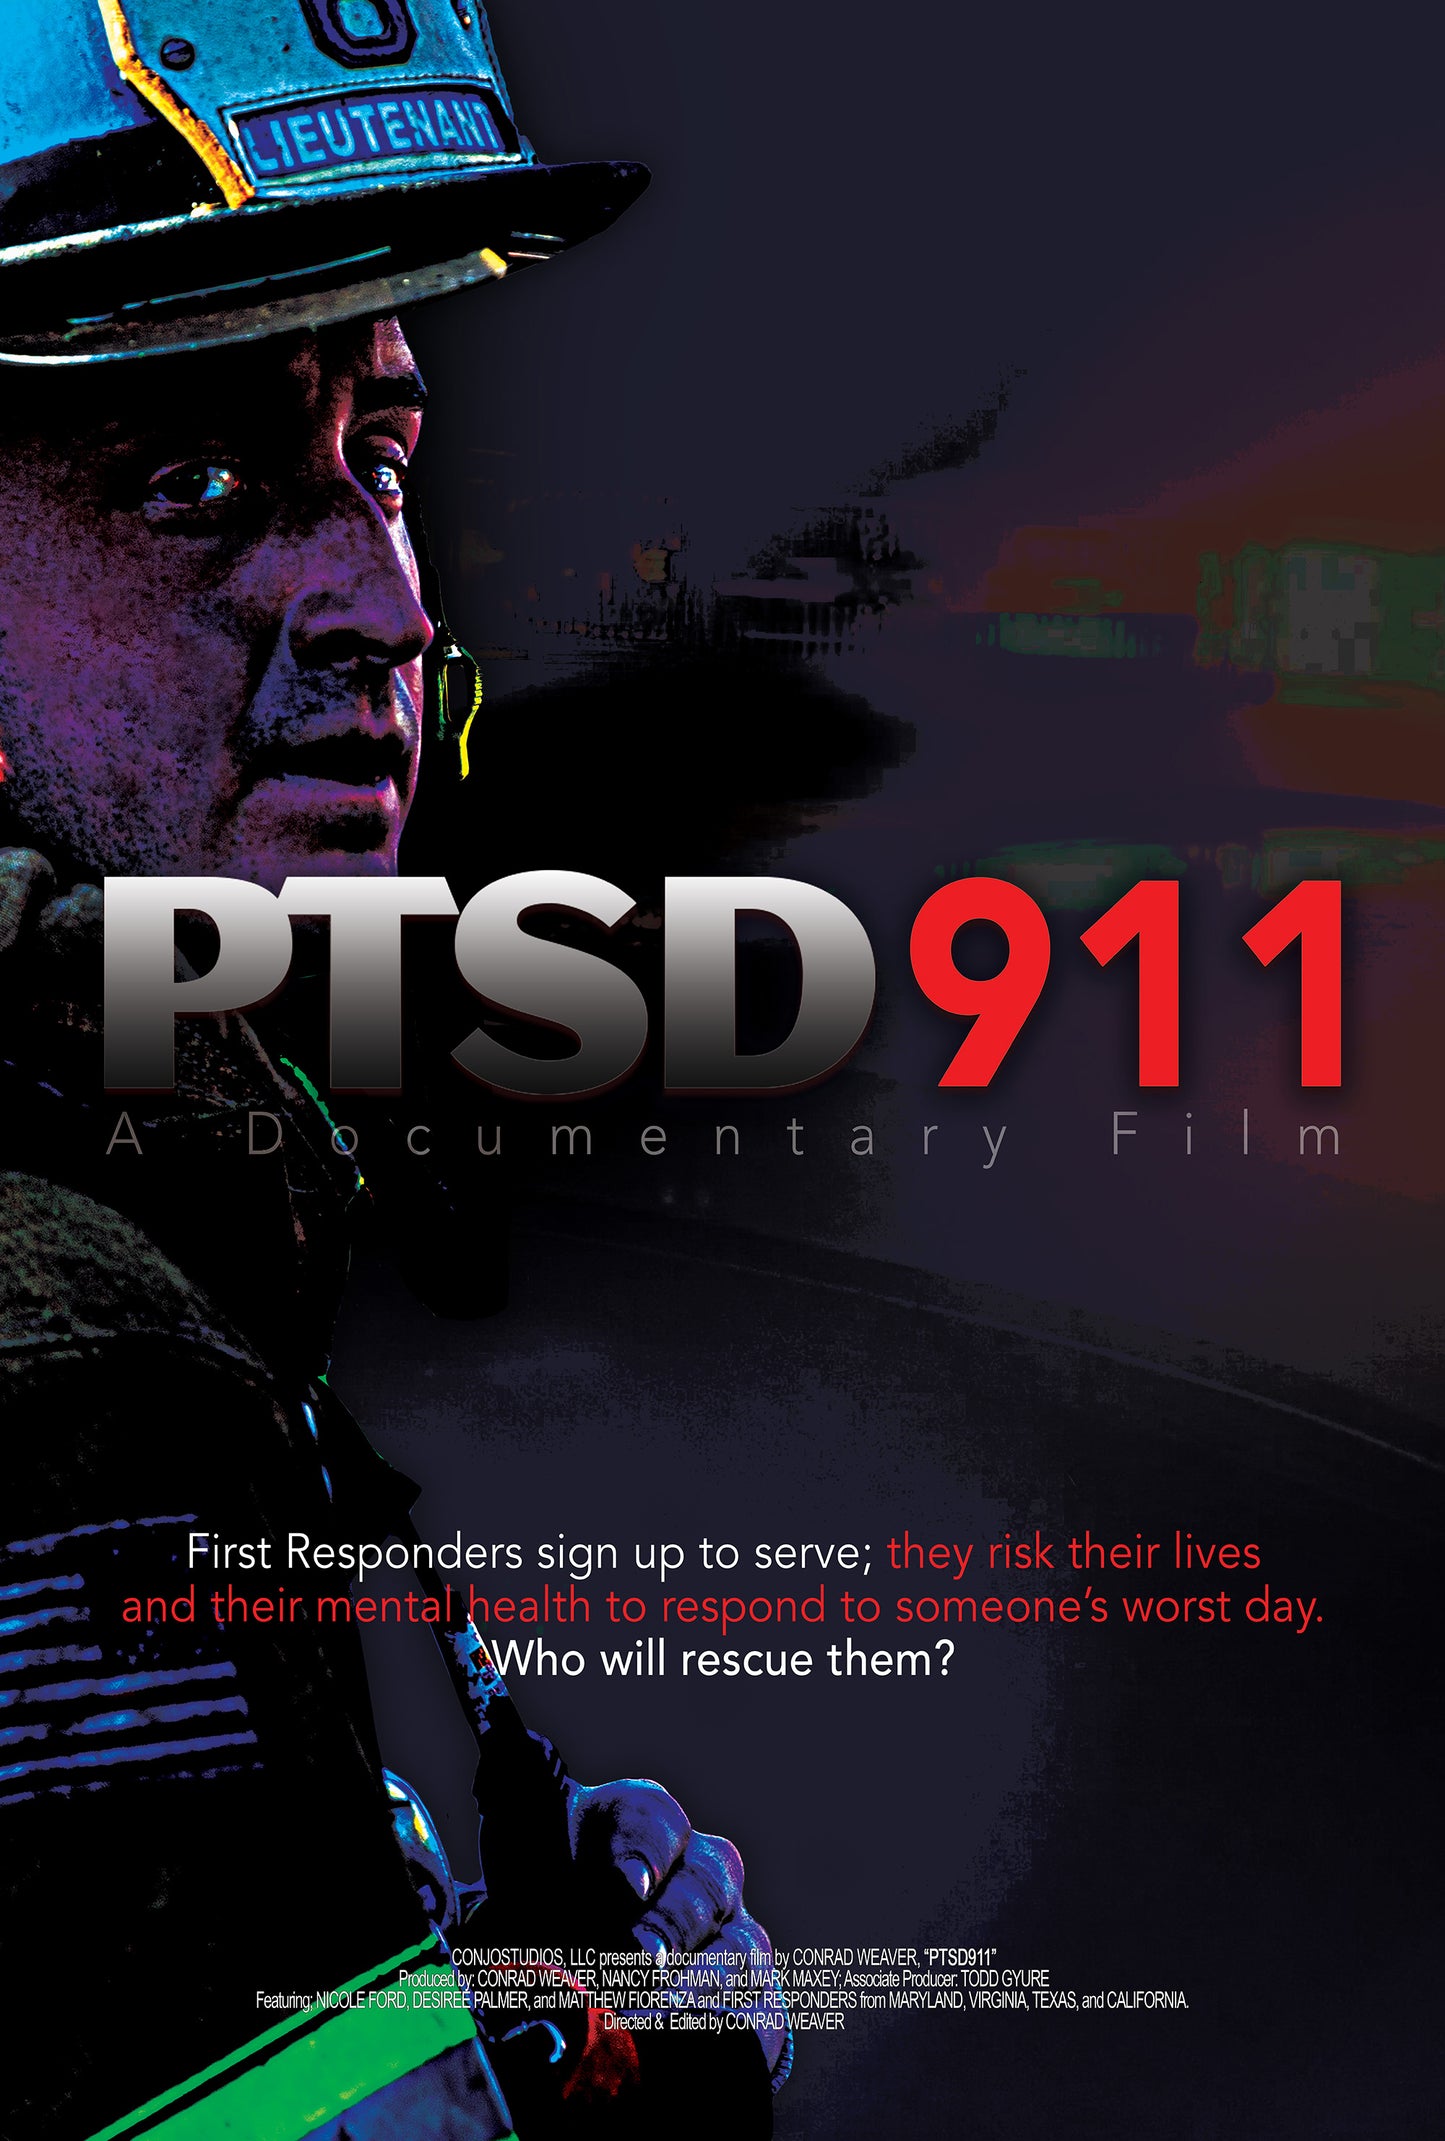 PTSD911 Film and Educational Toolkit